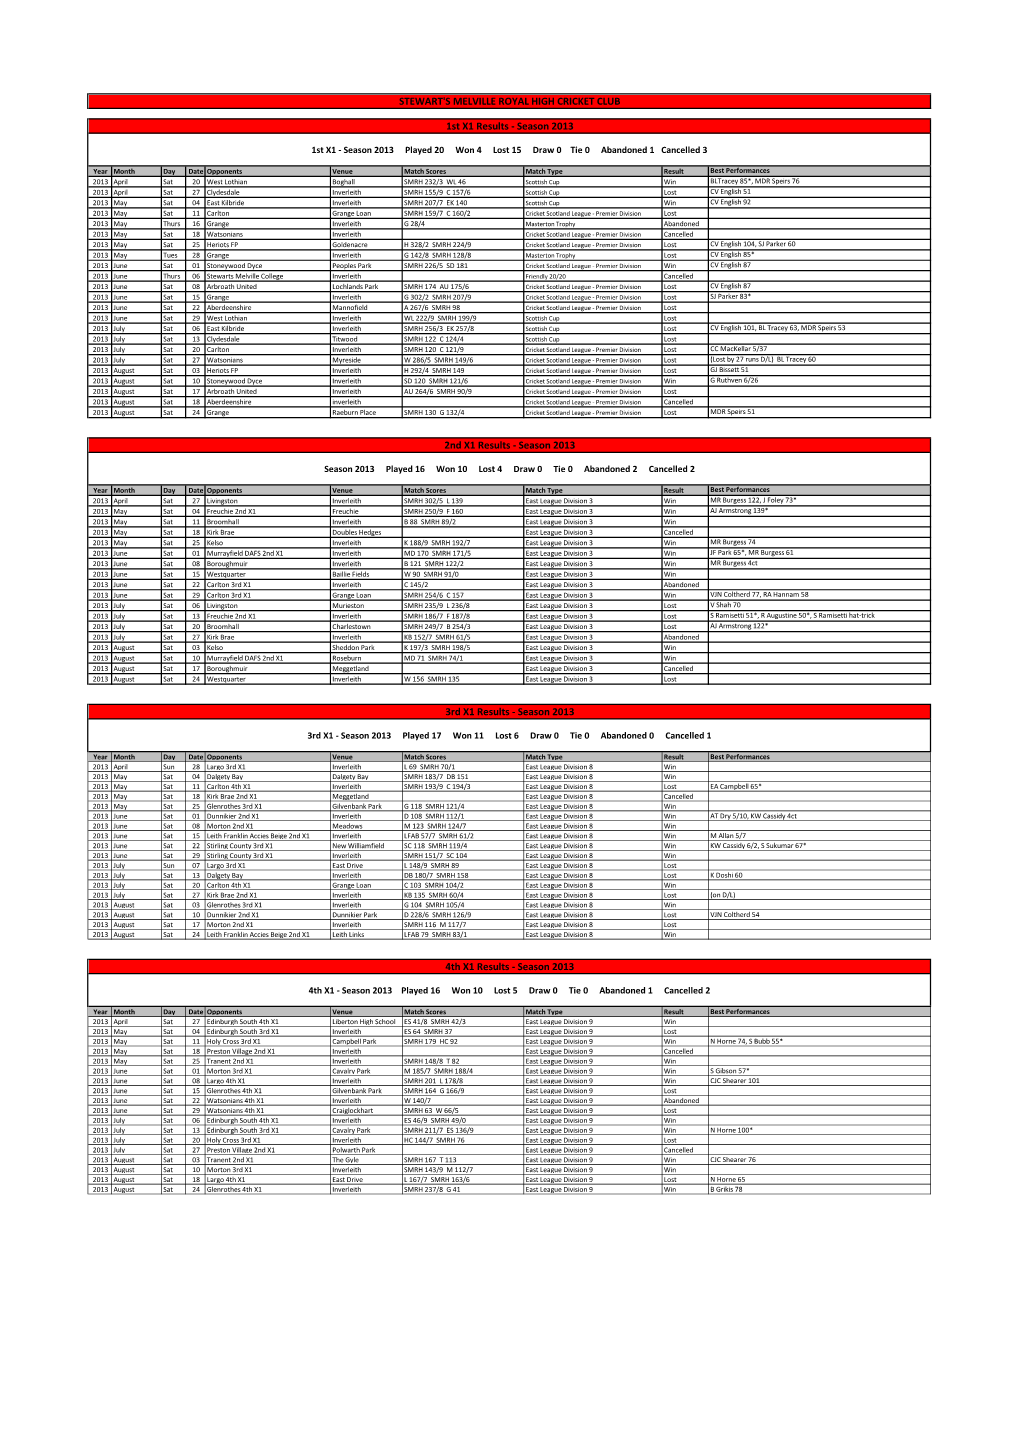 Season 2013 3Rd X1 Results